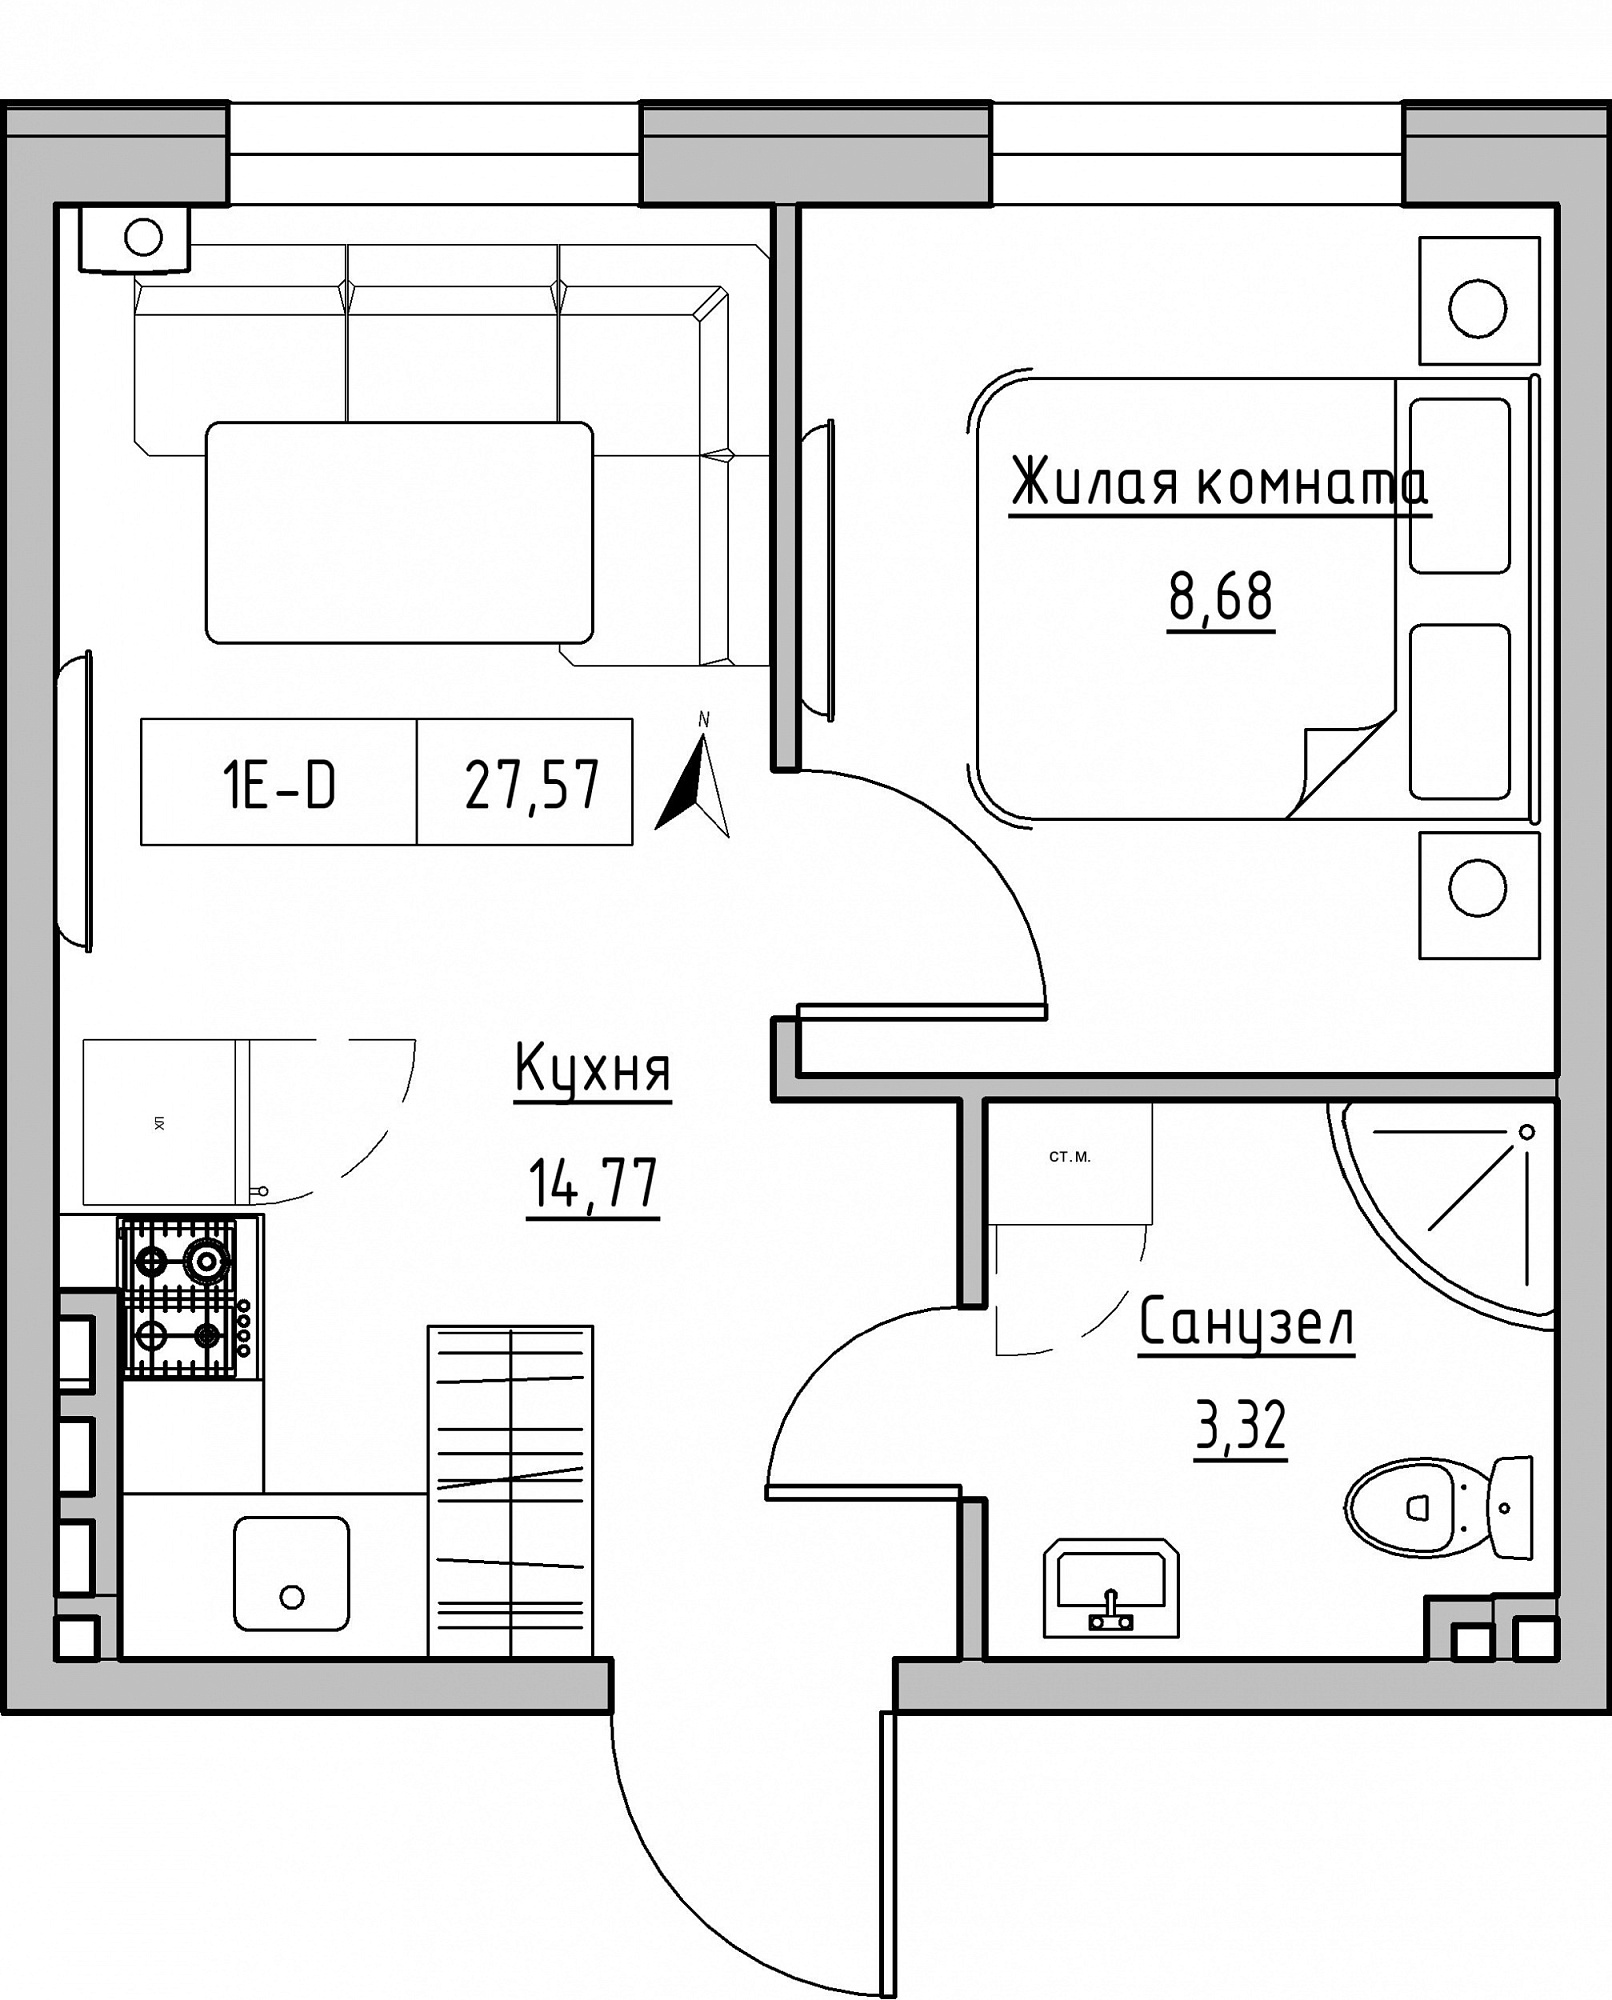 Planning 1-rm flats area 27.57m2, KS-024-03/0002.